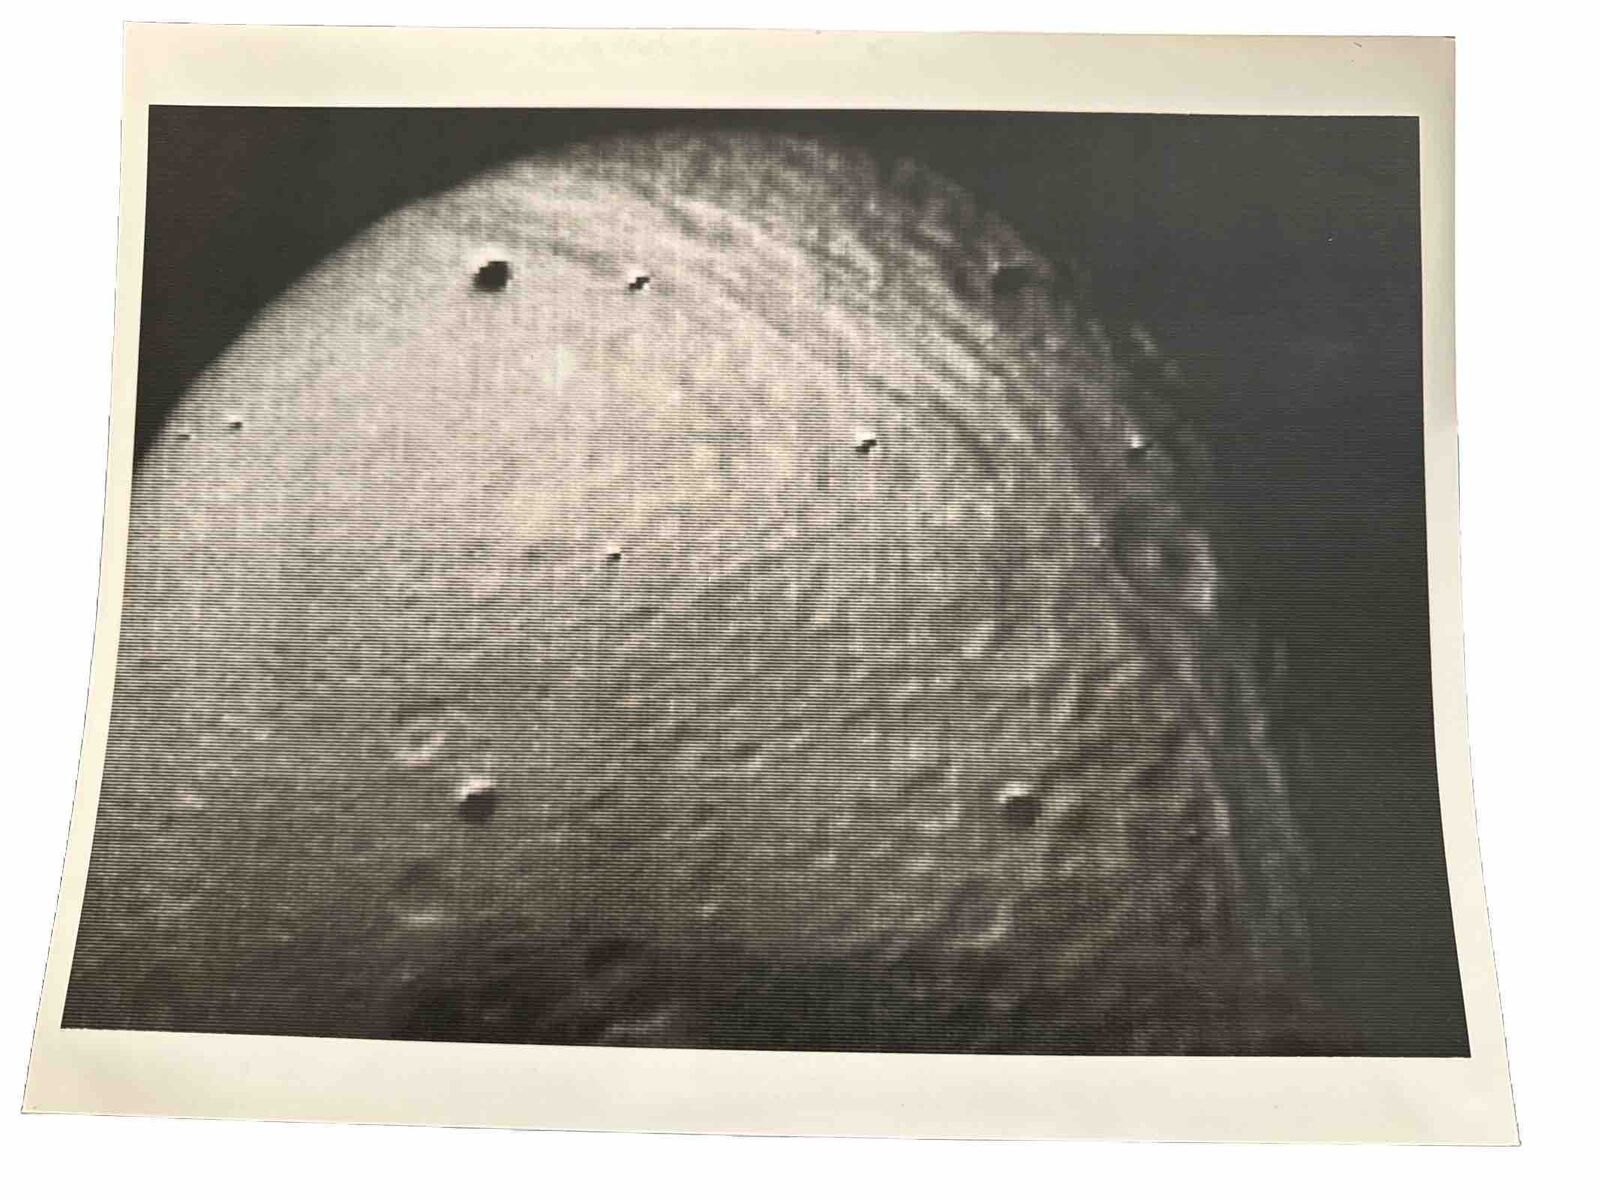 ORIGINAL JPL NASA SATURN MOON TETHYS VOYAGER 2 PHOTO KODAK PAPER 08/26/1981